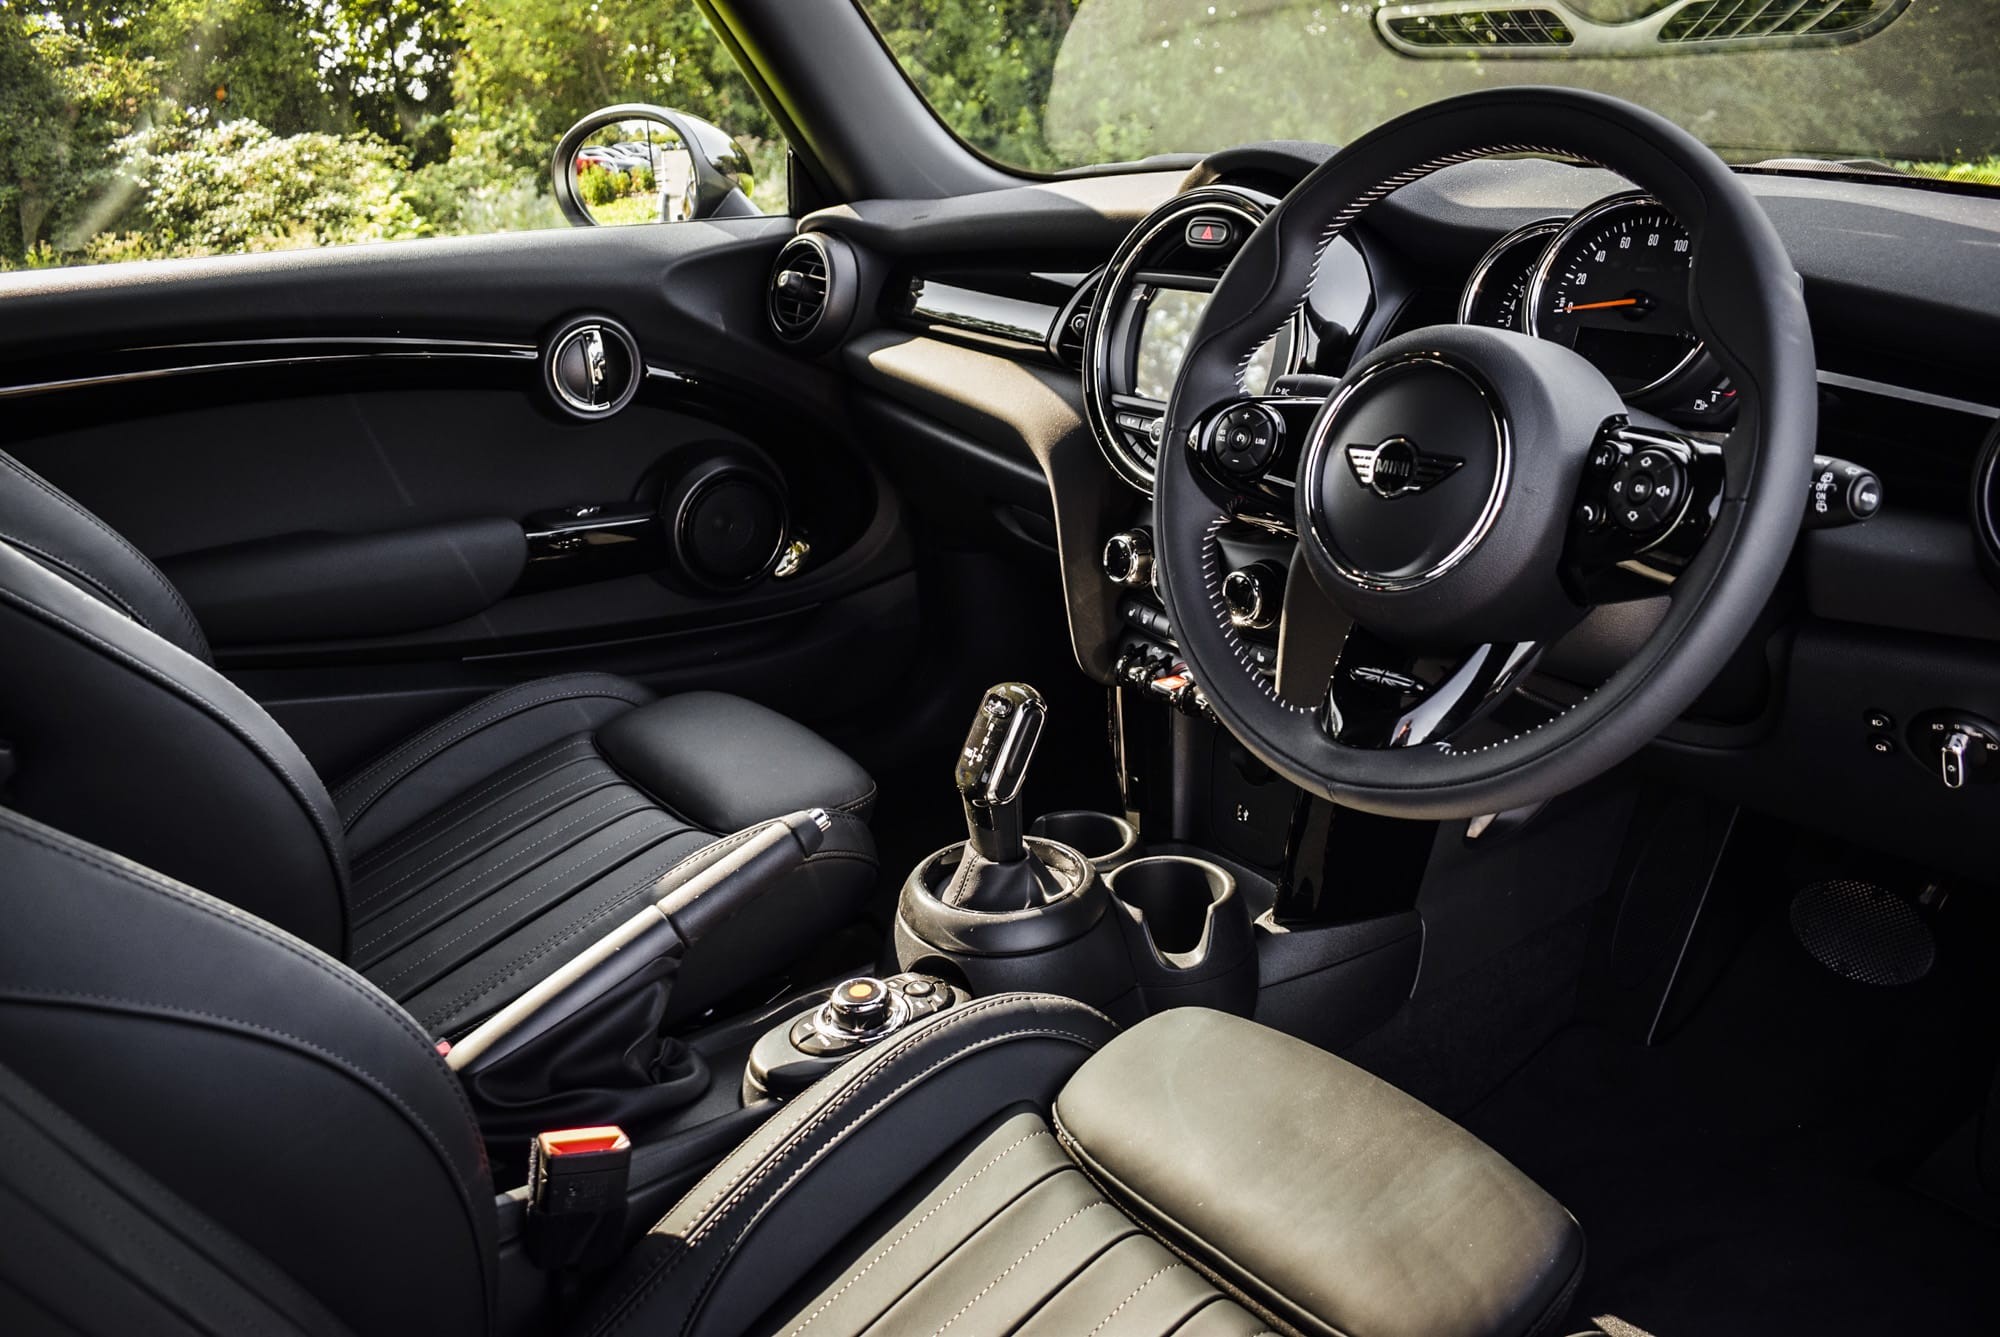 Explore The Special Edition Burgundy MINI Cooper 3-Door Hatch